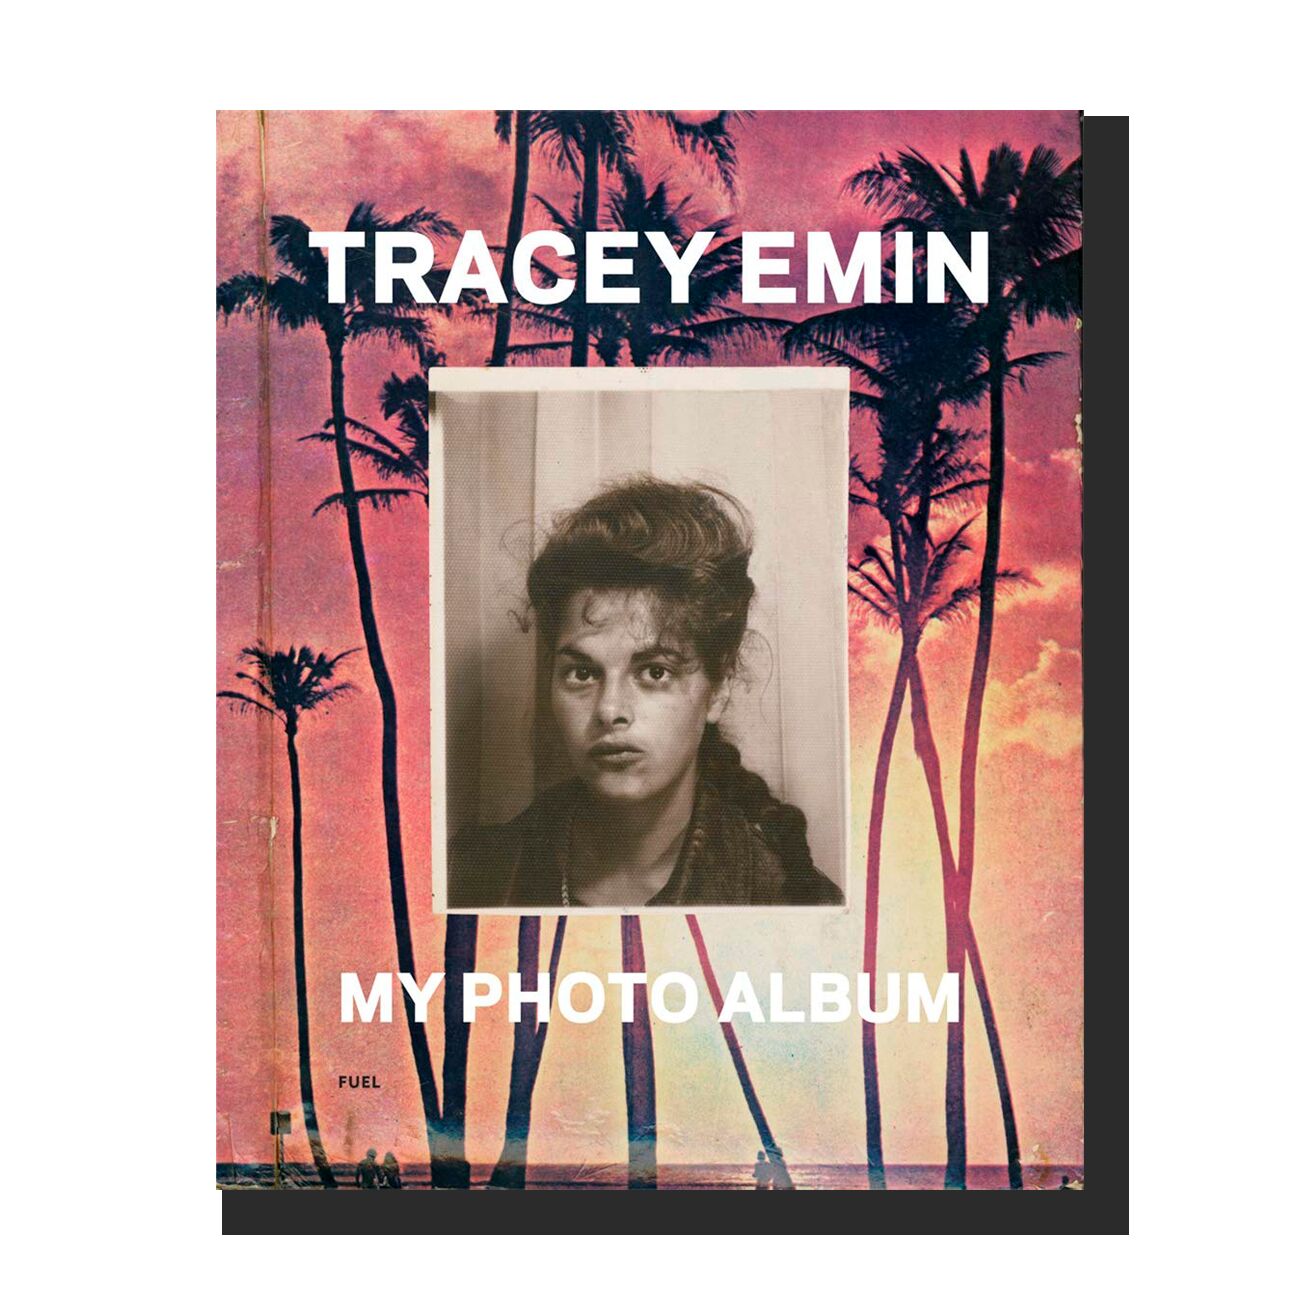 Tracey Emin: My Photo Album